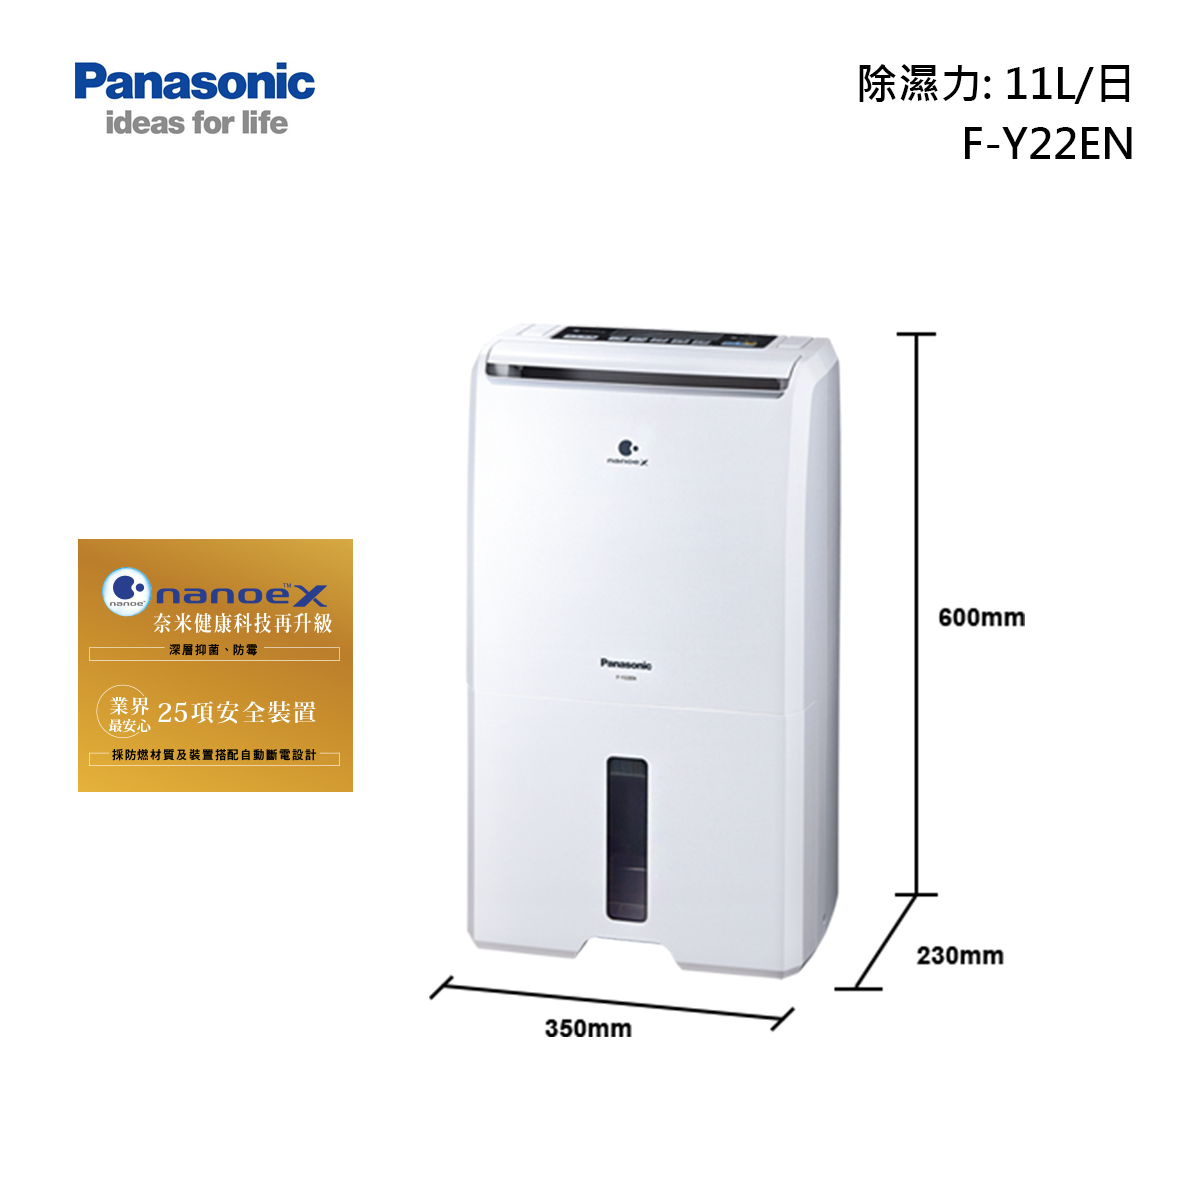 Panasonic 松下F-Y22EN 除濕機| Fuchia 甫佳電器| 02-2736-0238